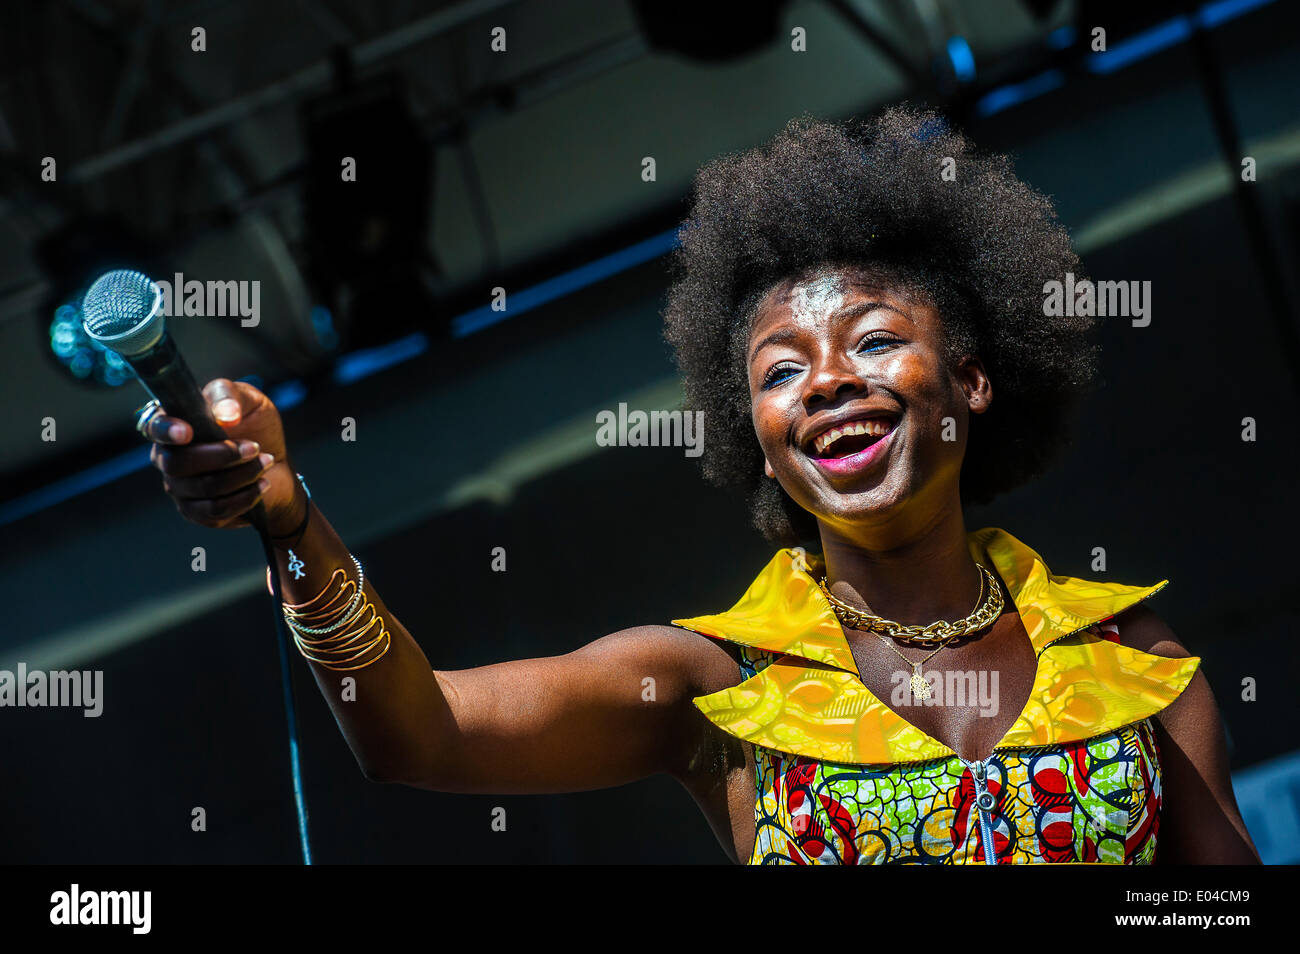 Turin, Italie. 01 mai, 2014. La Piazza Castello ' Torino Jazz Festival ' - Taranta nera - Salento a rencontré l'Afrique Kandi Güira Crédit : Realy Easy Star/Alamy Live News Banque D'Images